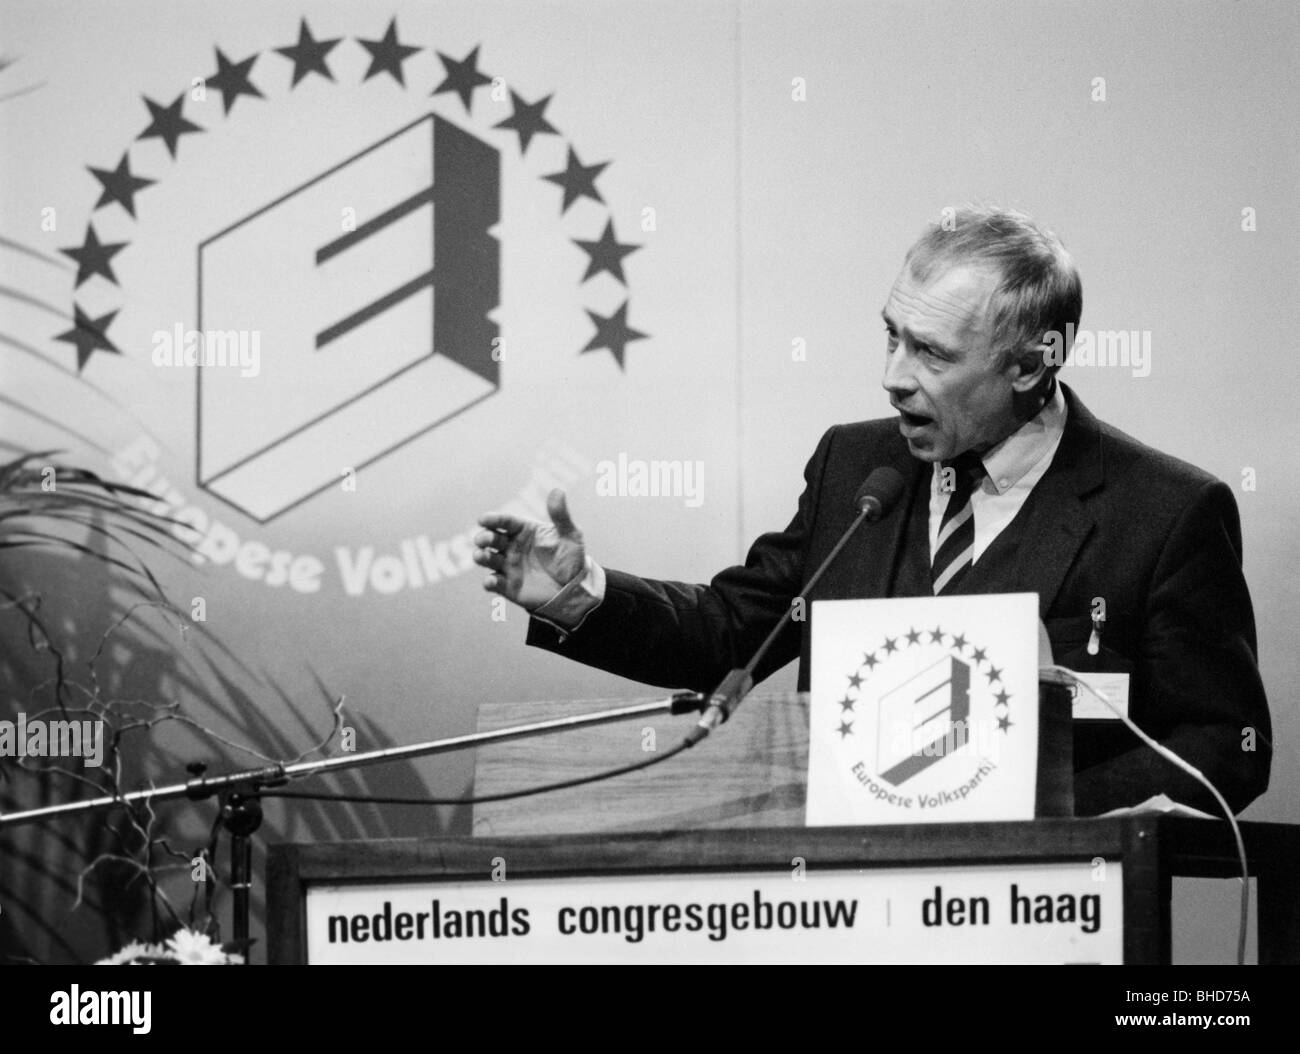 Geissler, Heiner, * 3.3.1930, politico tedesco (CDU), segretario generale della CDU 1977 - 1989, discorso, congresso del Partito Popolare europeo (PPE), 1986, Foto Stock